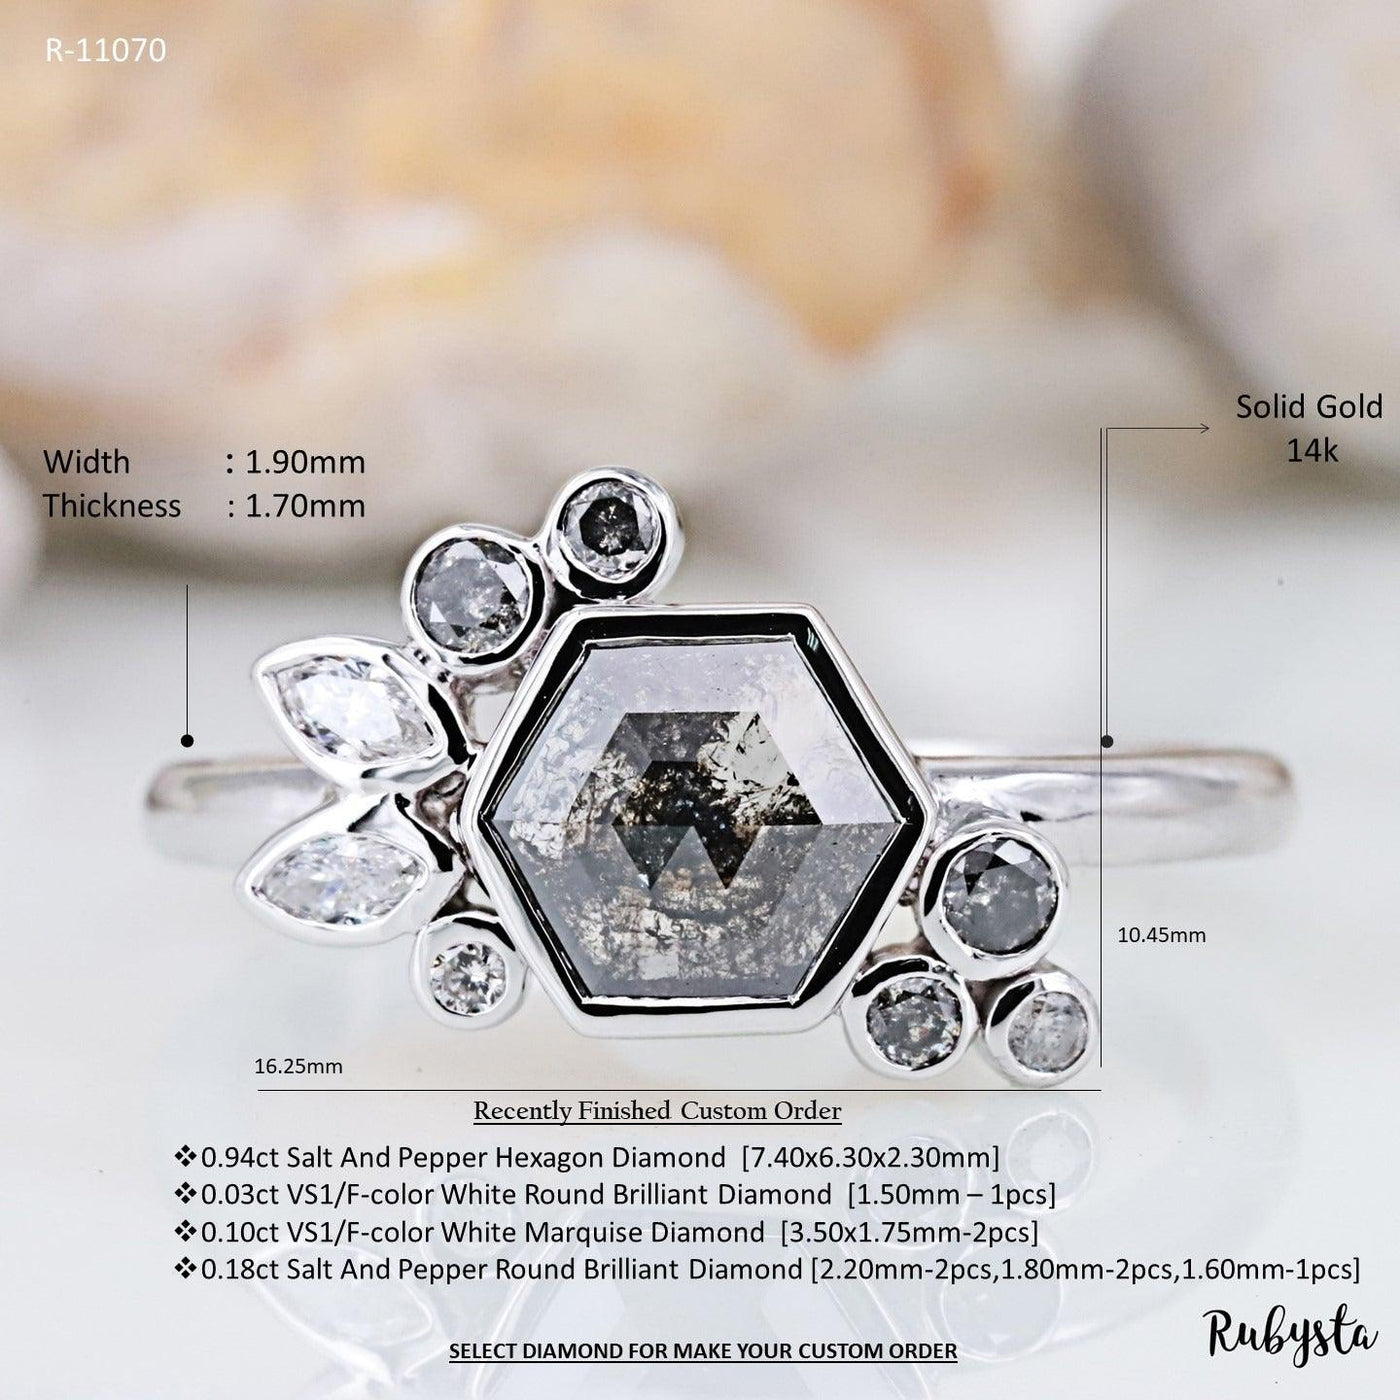 Vintage Engagement Ring | Hexagon Diamond Ring | Promise Ring - Rubysta